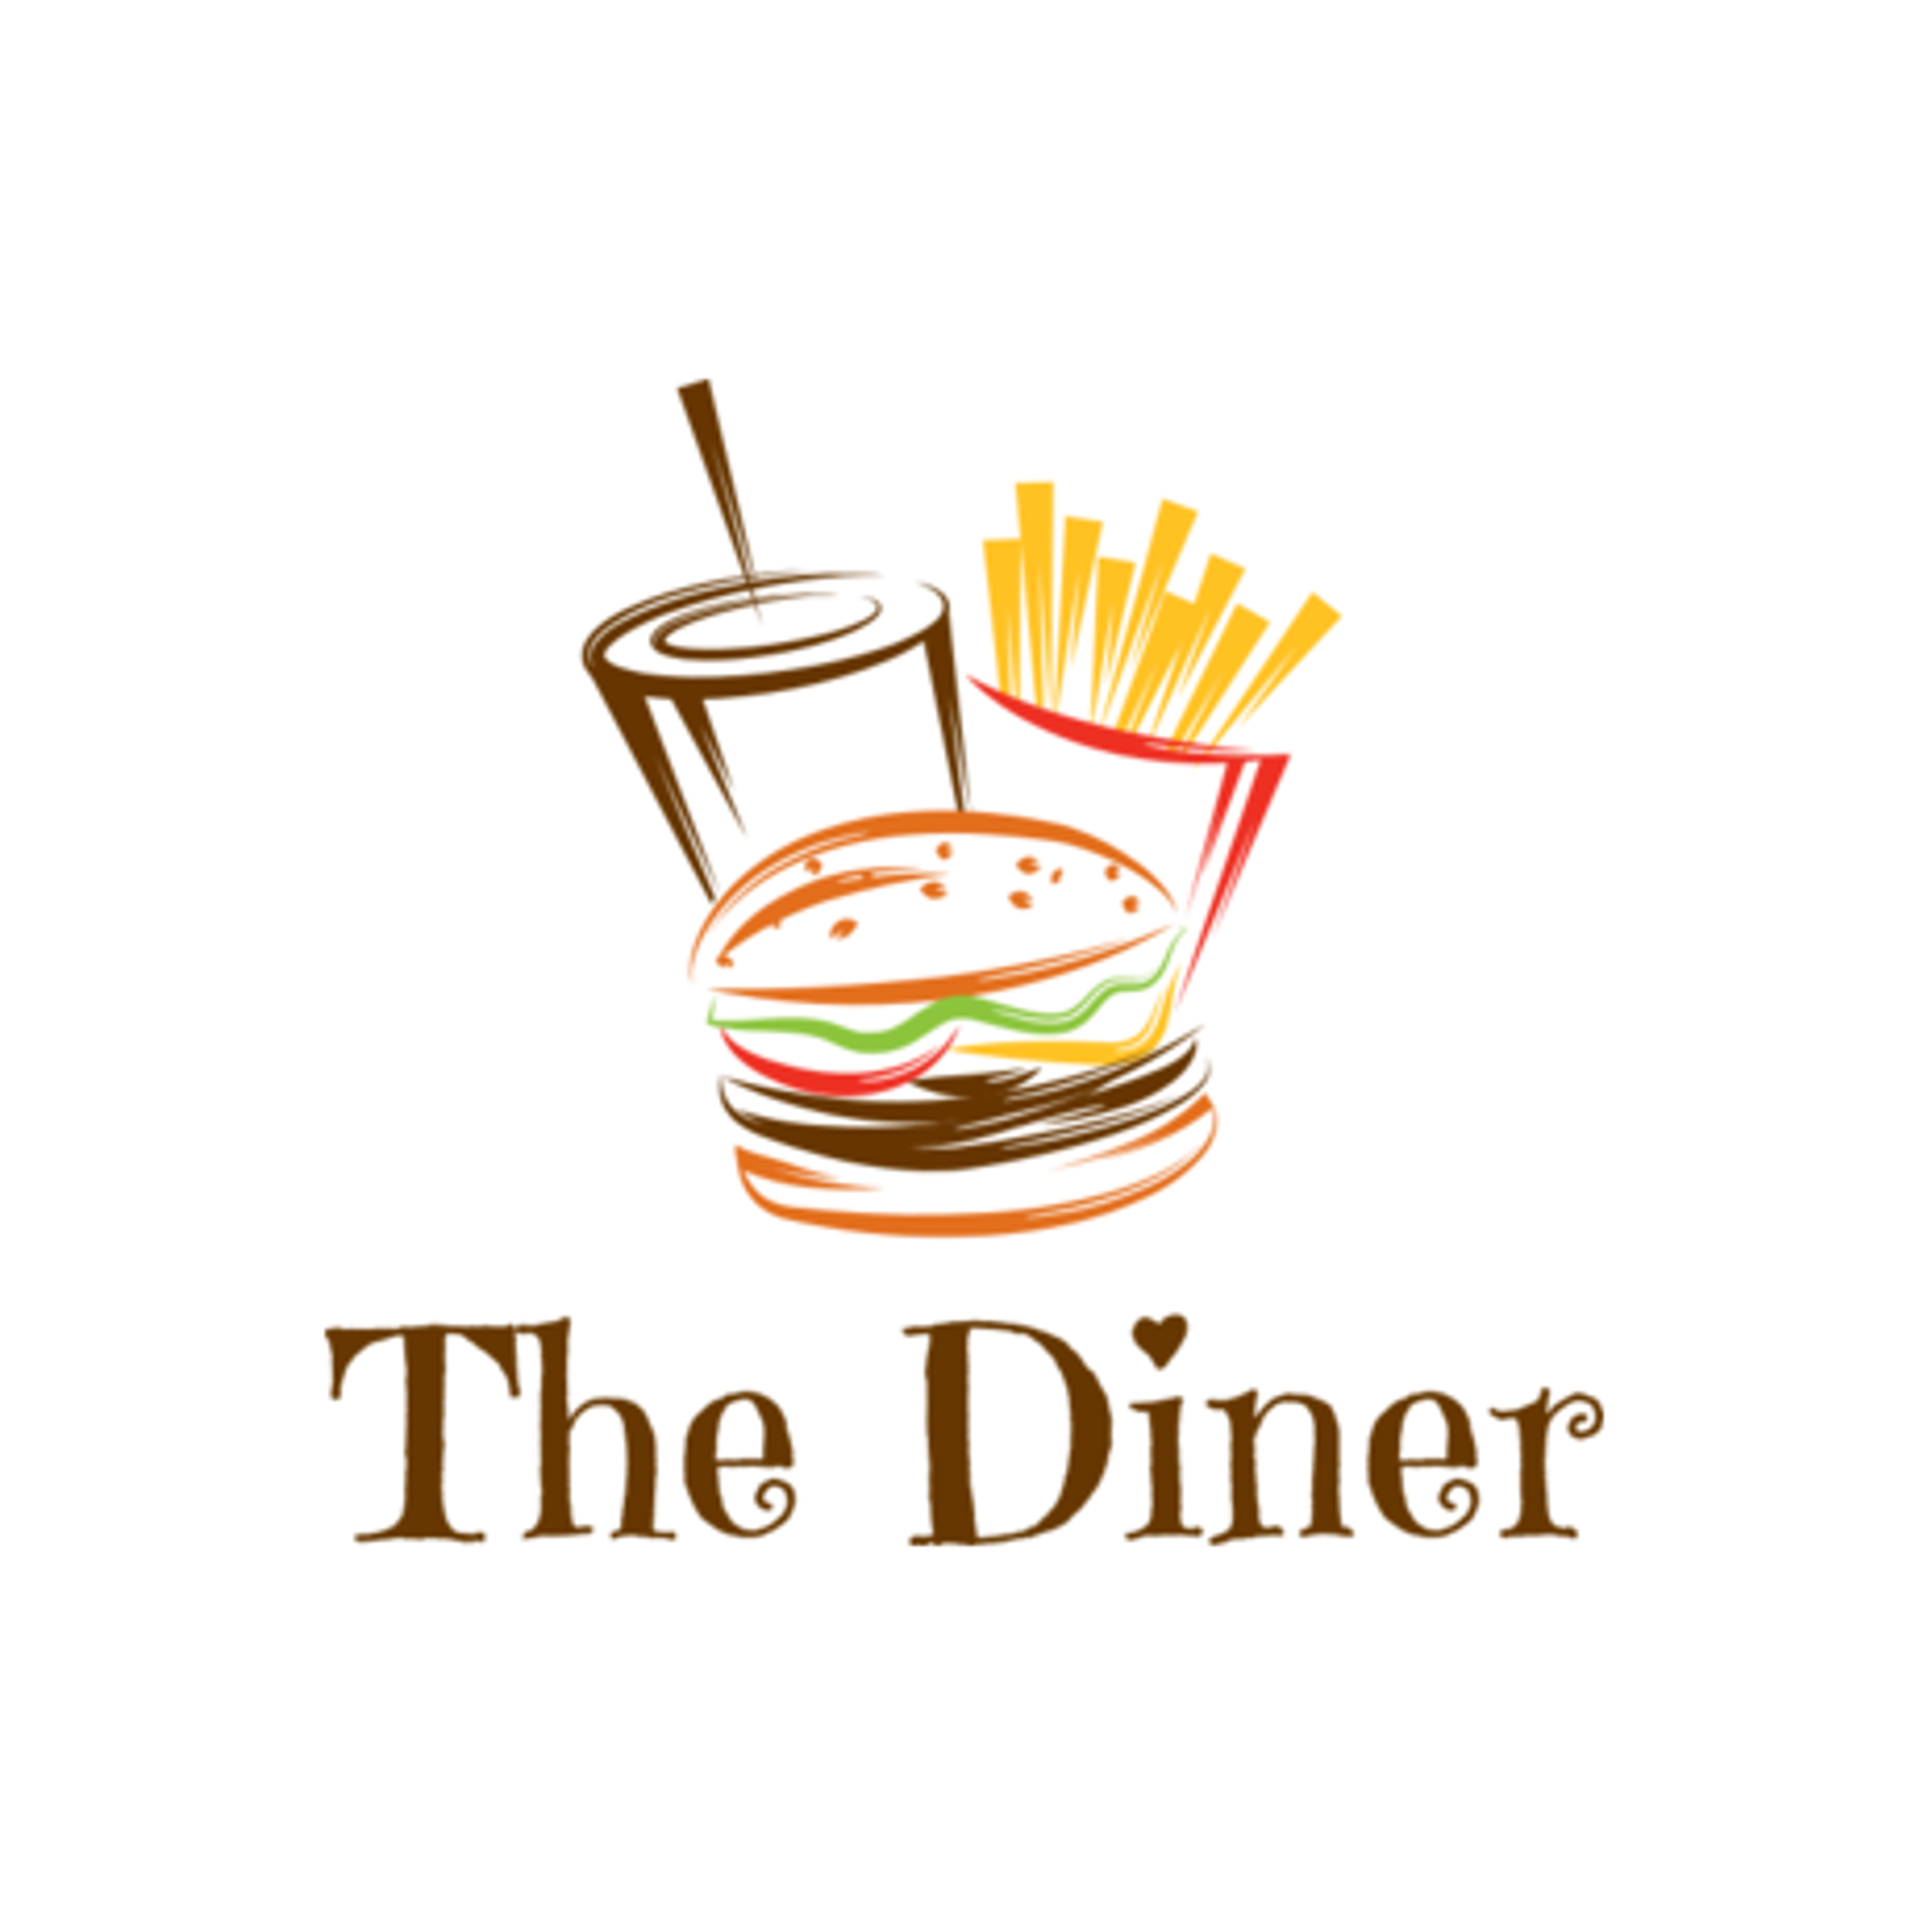 Background image - The Diner